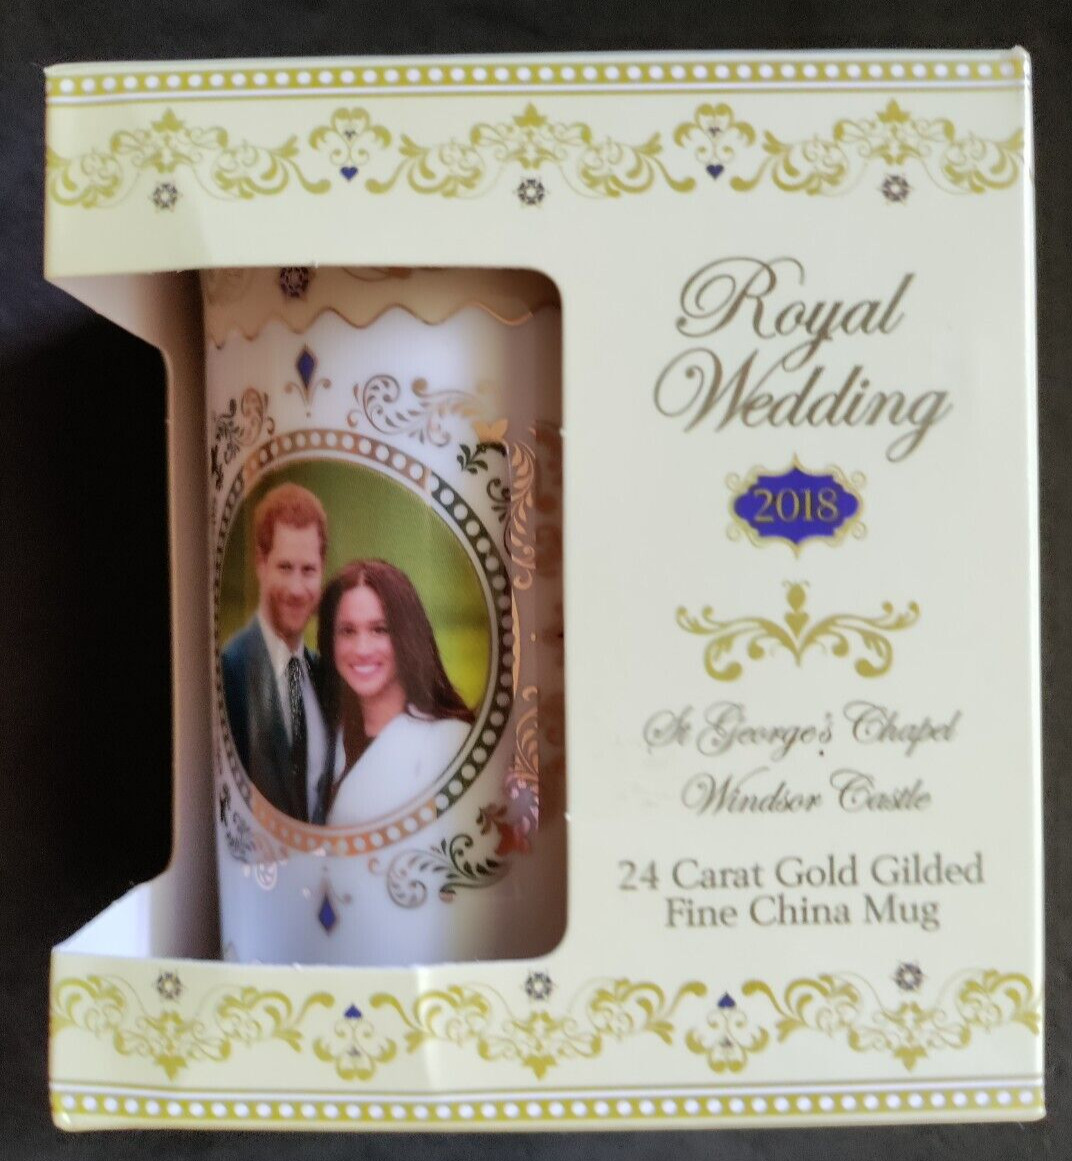 Prince Harry & Meghan Markle Royal Wedding 19th May 2018 - China Mug 24 carat 